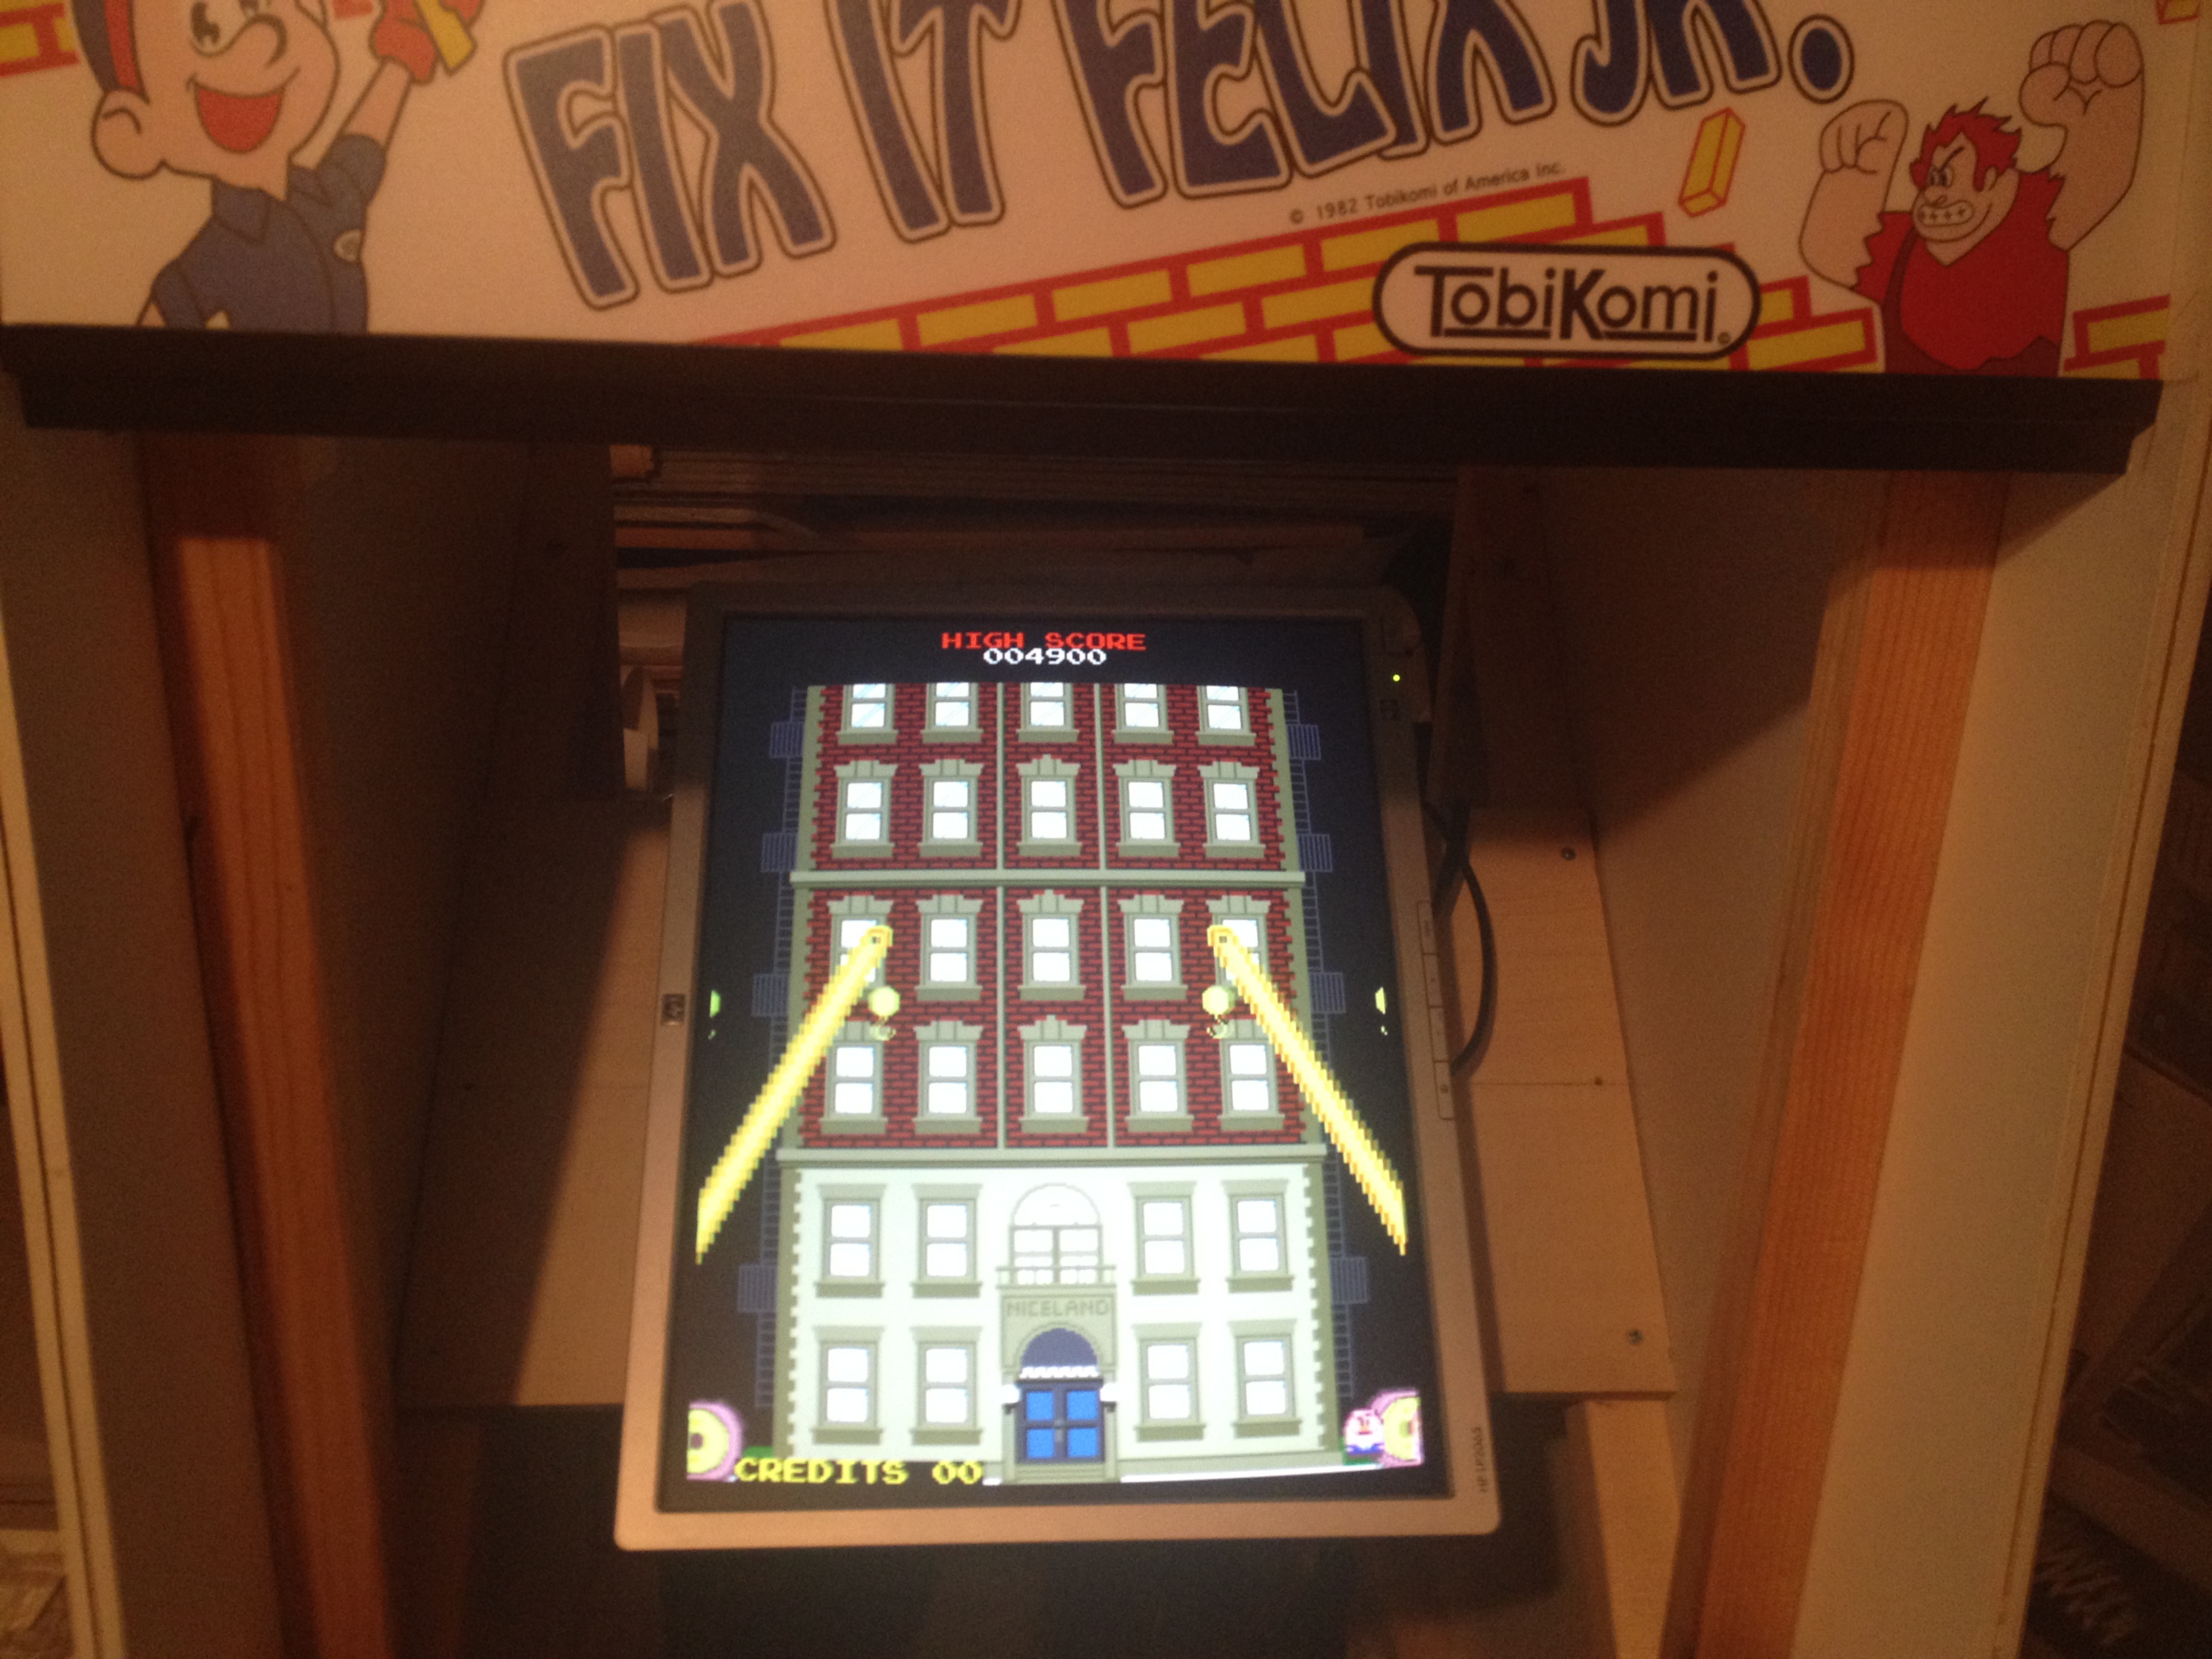 Attract mode of fix it felix arcade